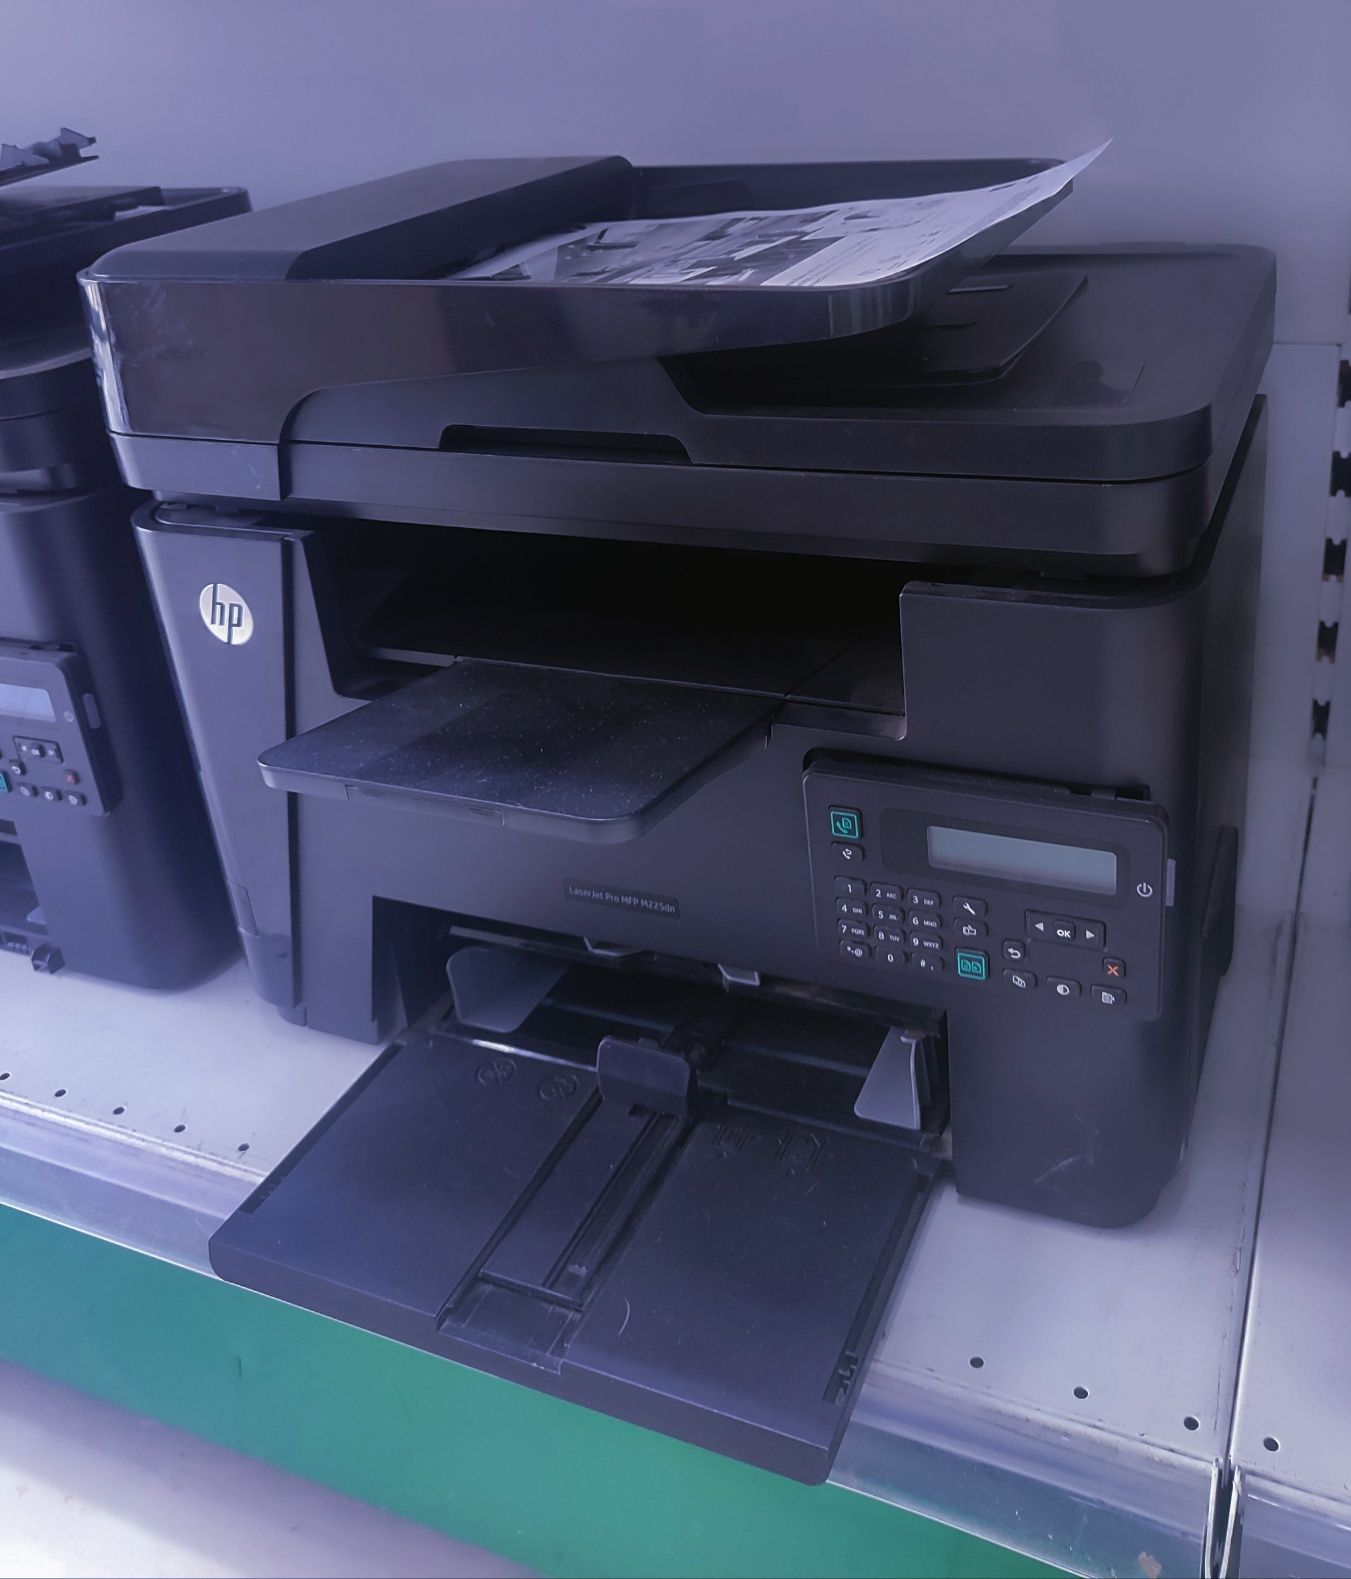 Мфу принтер сканер копир HP laserJet Pro MFP M225dn состояние отличное